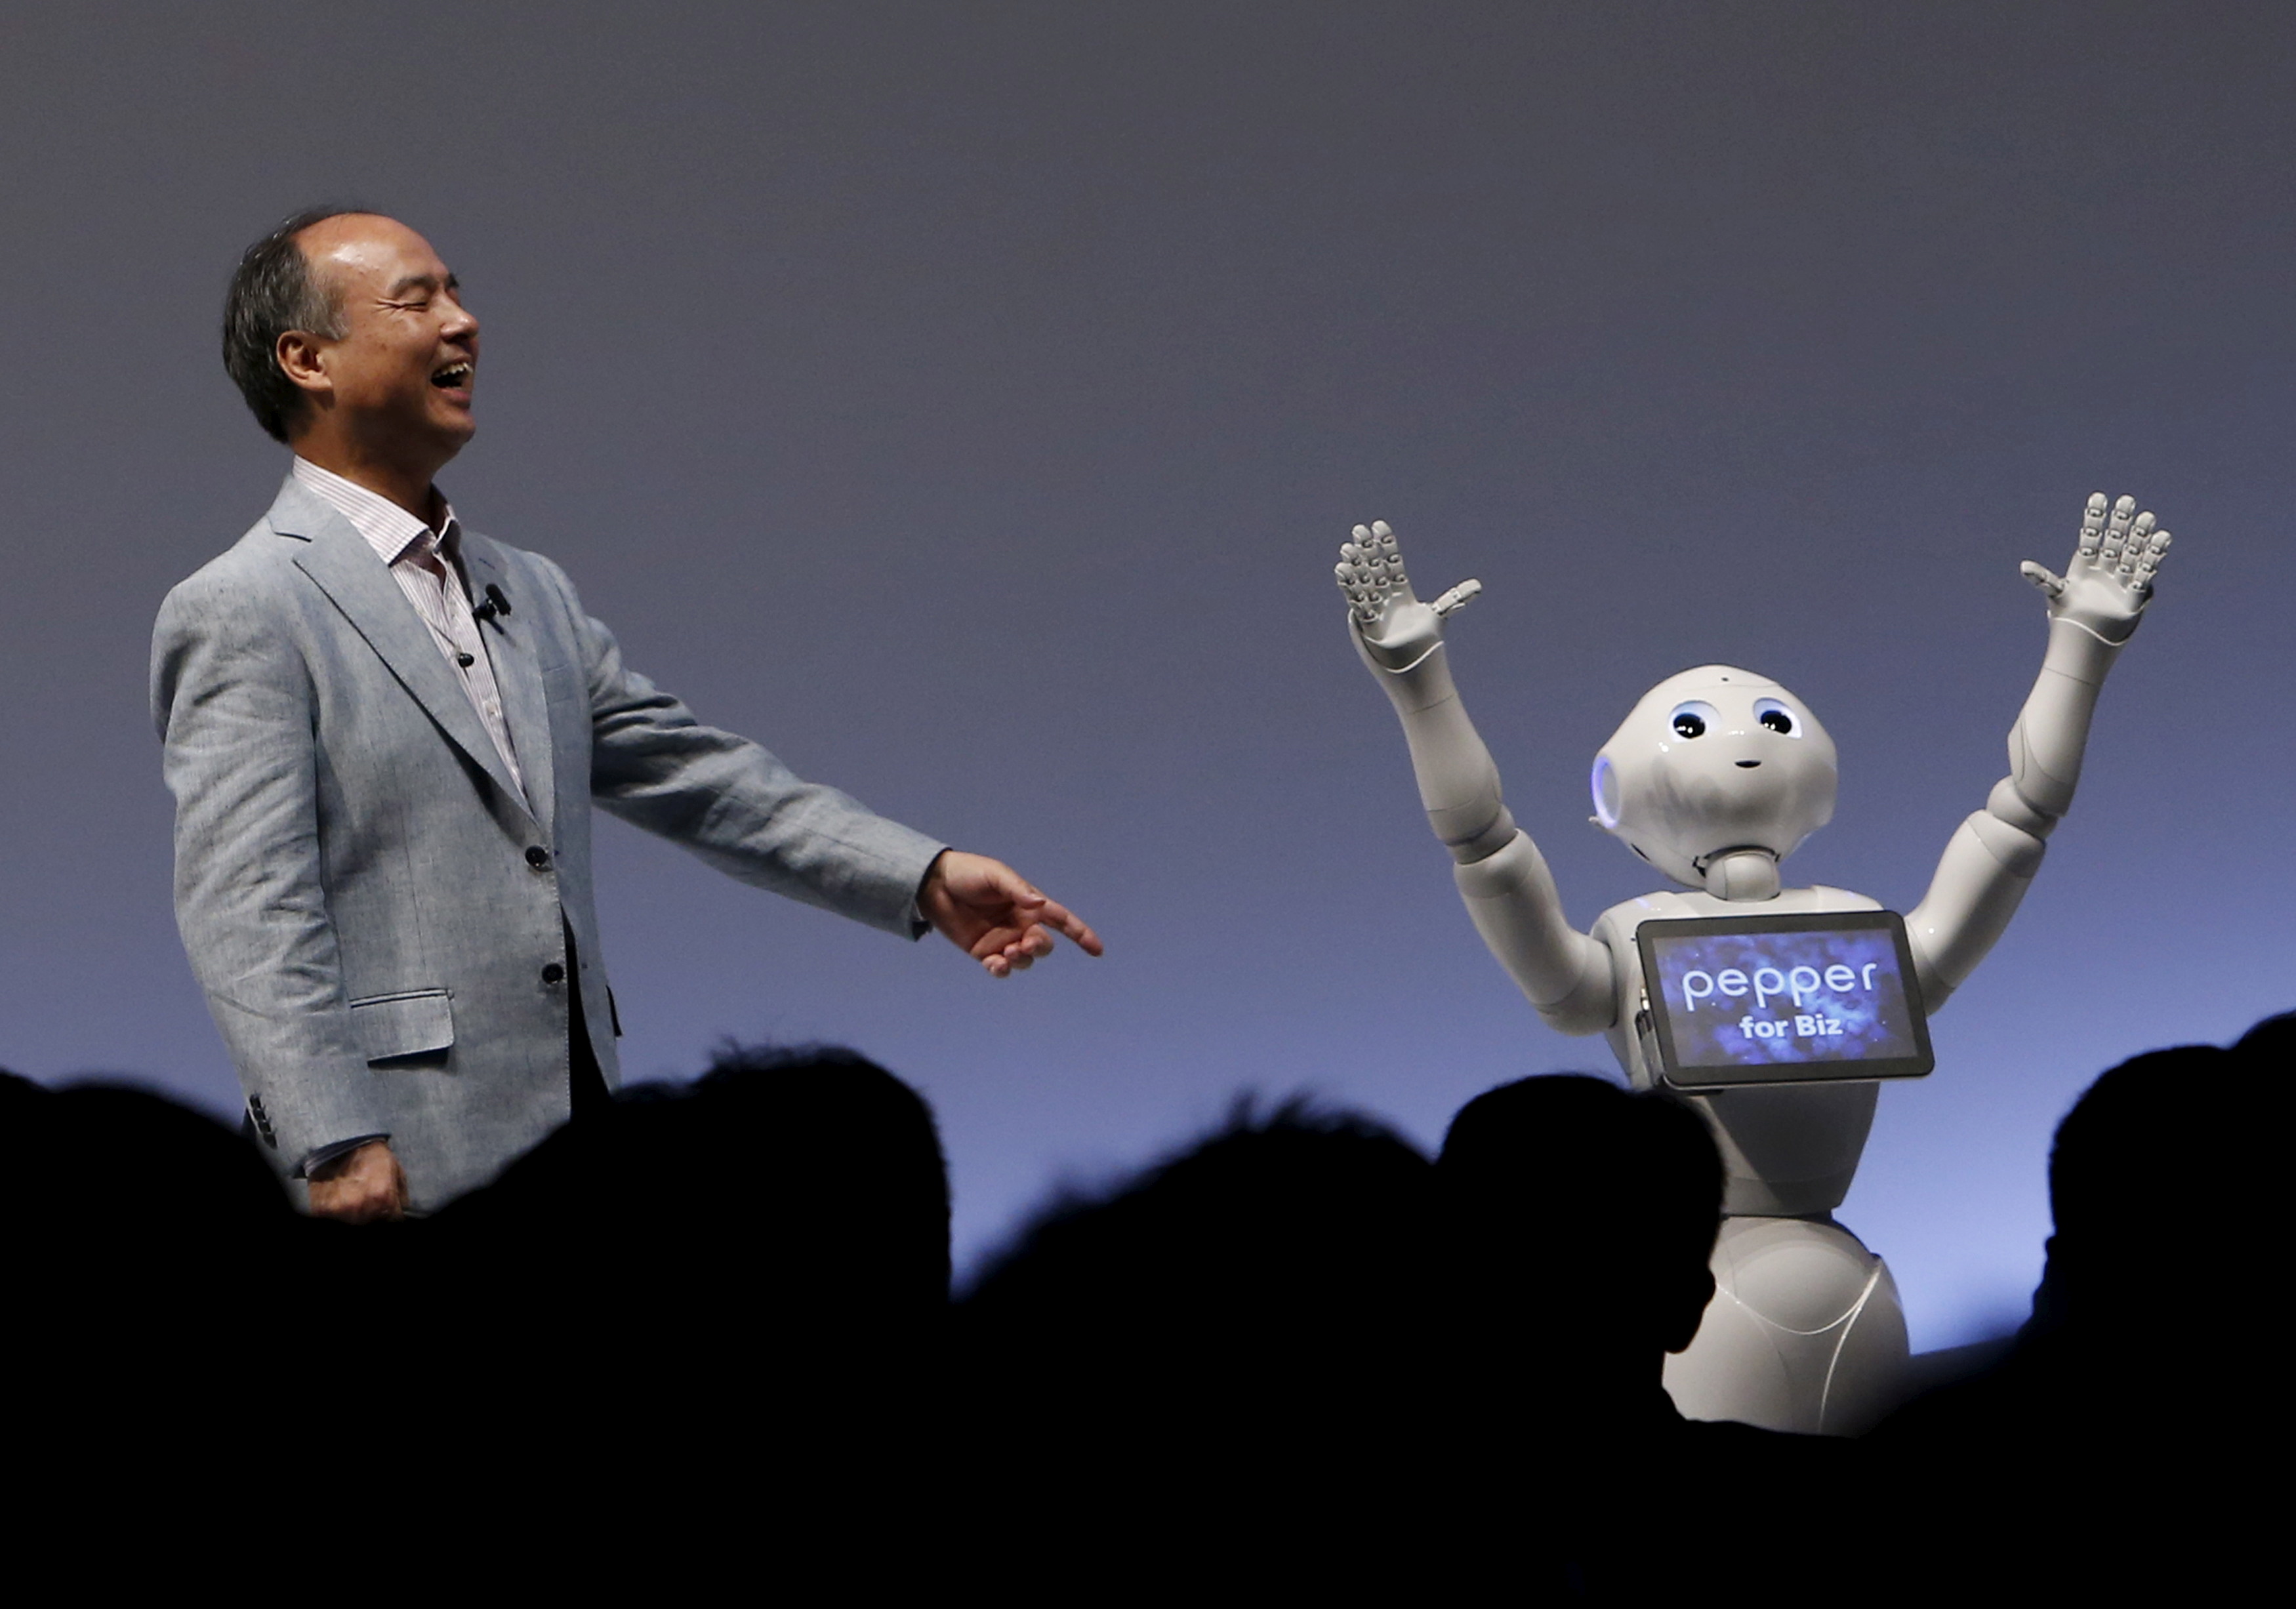 SoftBank Group Corp. Chairman and CEO Masayoshi Son reacts as SoftBank's human-like robots named 